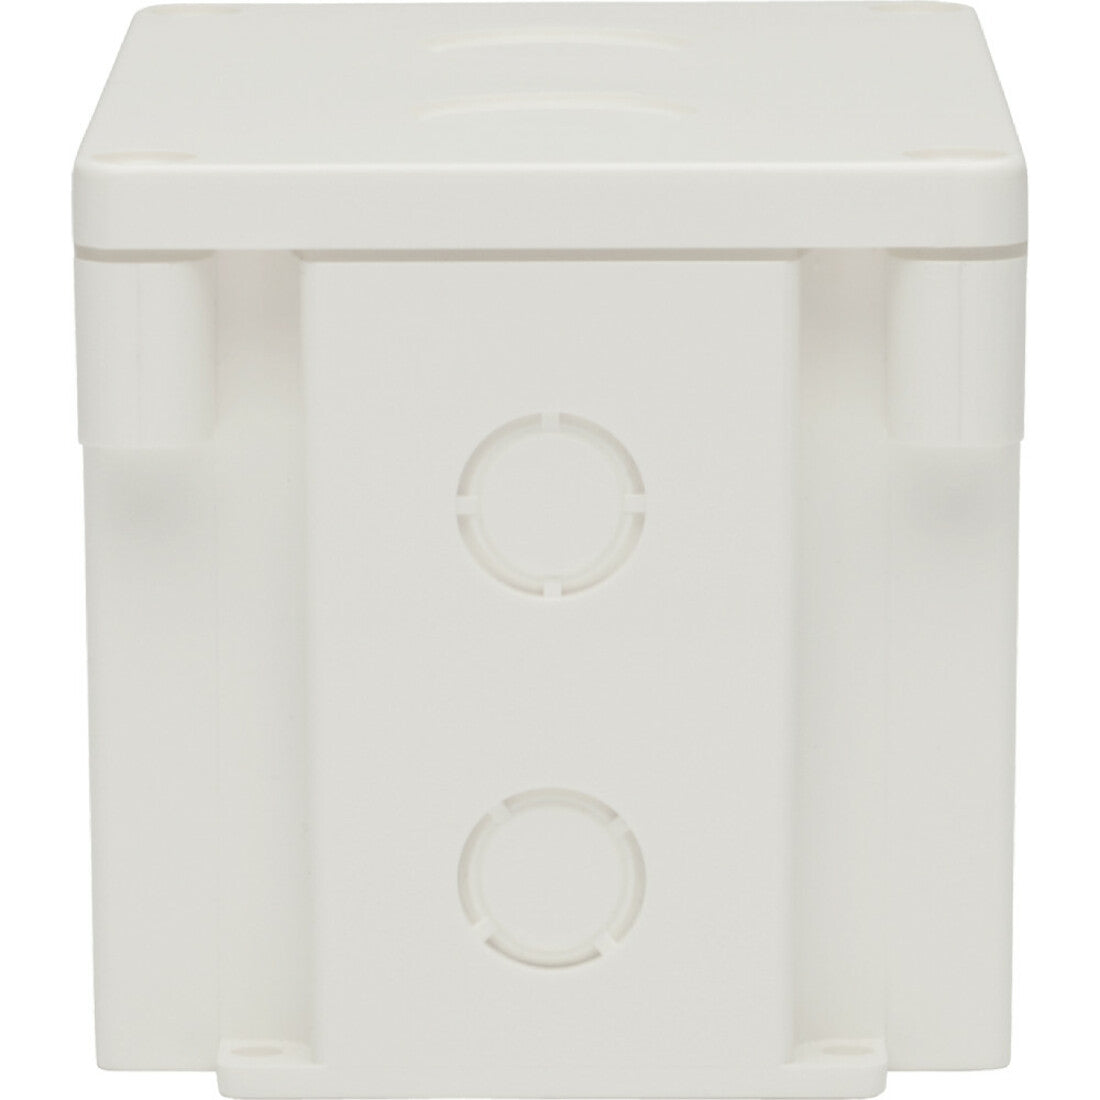 Tripp Lite by Eaton N206-SB01-IND Waterproof Electrical Junction Box, Surface Mounting Box